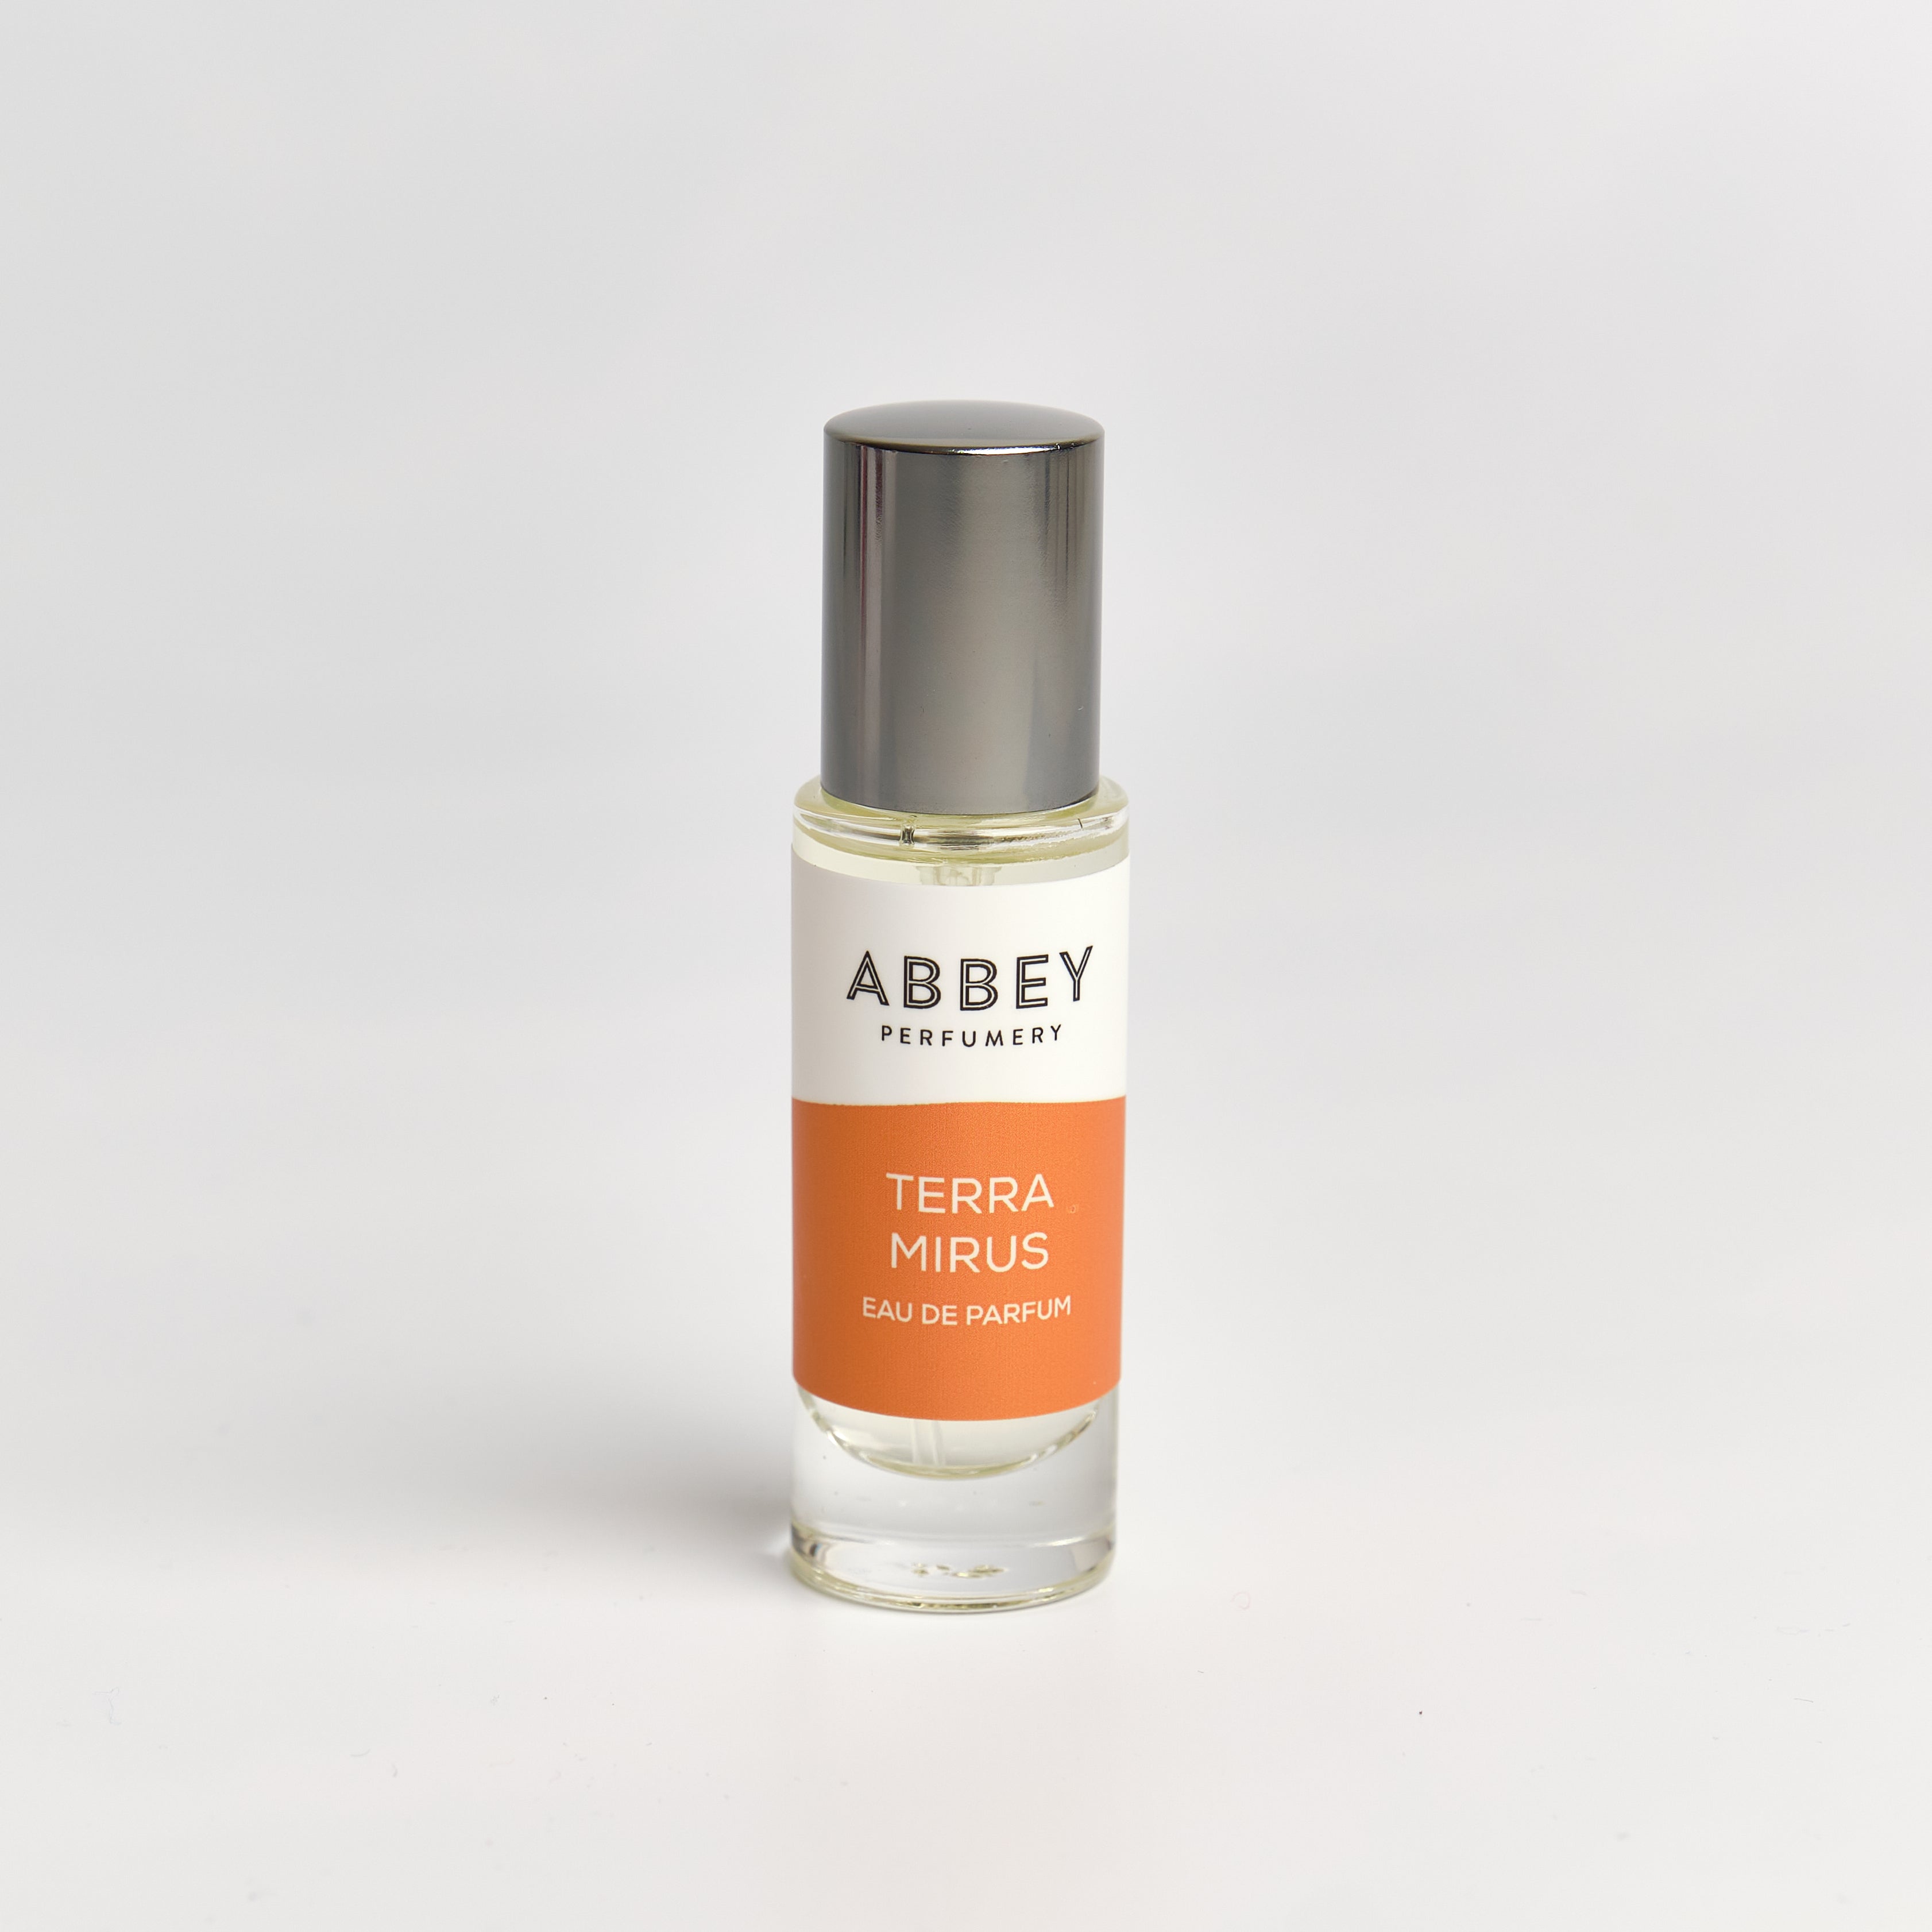 Terra Mirus perfume bottle 10ml on white background